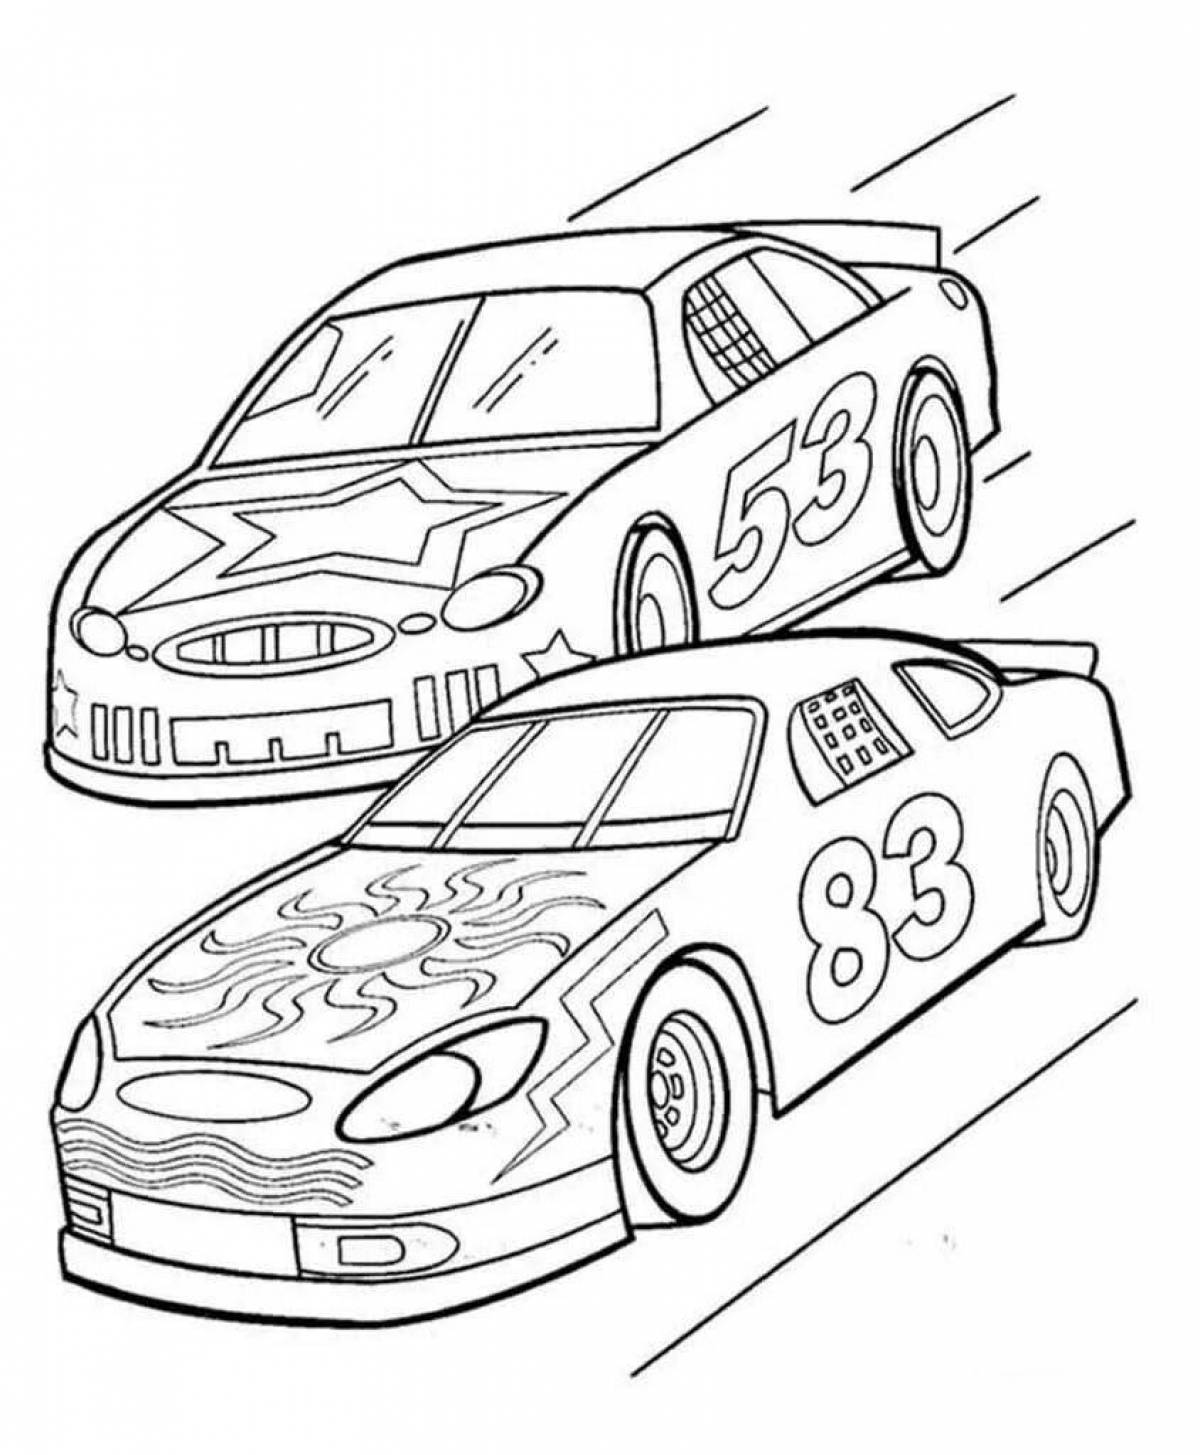 Fabulous racing car coloring page